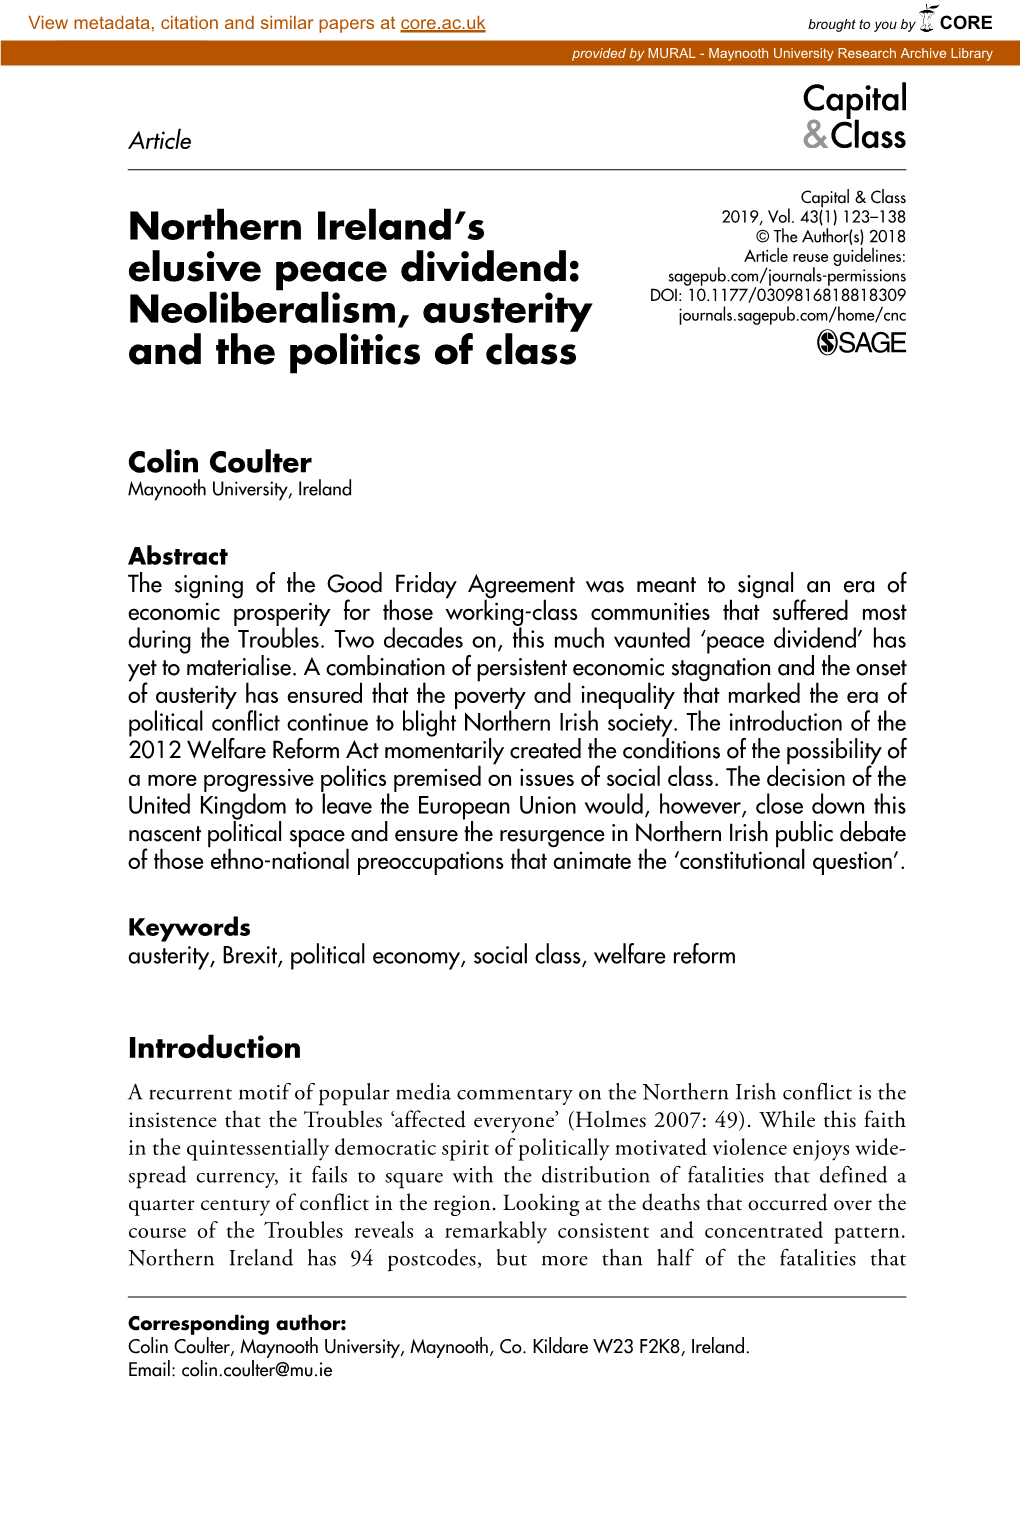 Northern Ireland's Elusive Peace Dividend: Neoliberalism, Austerity